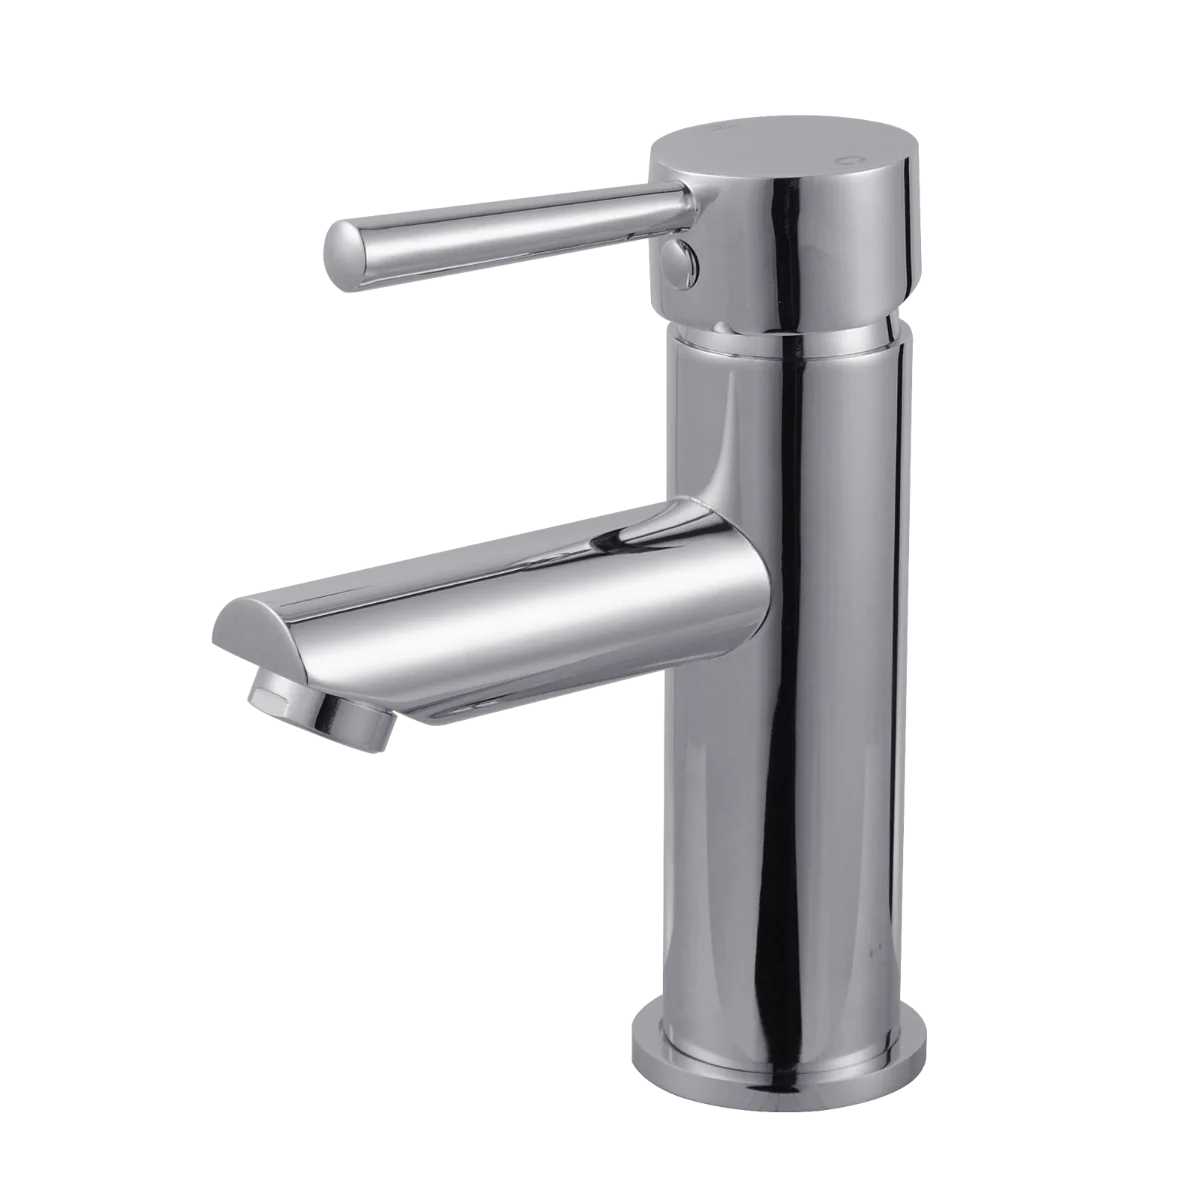 Norico Pentro Round Basin Mixer Tap: Elegant, modern design for bathroom sinks-BT23.01